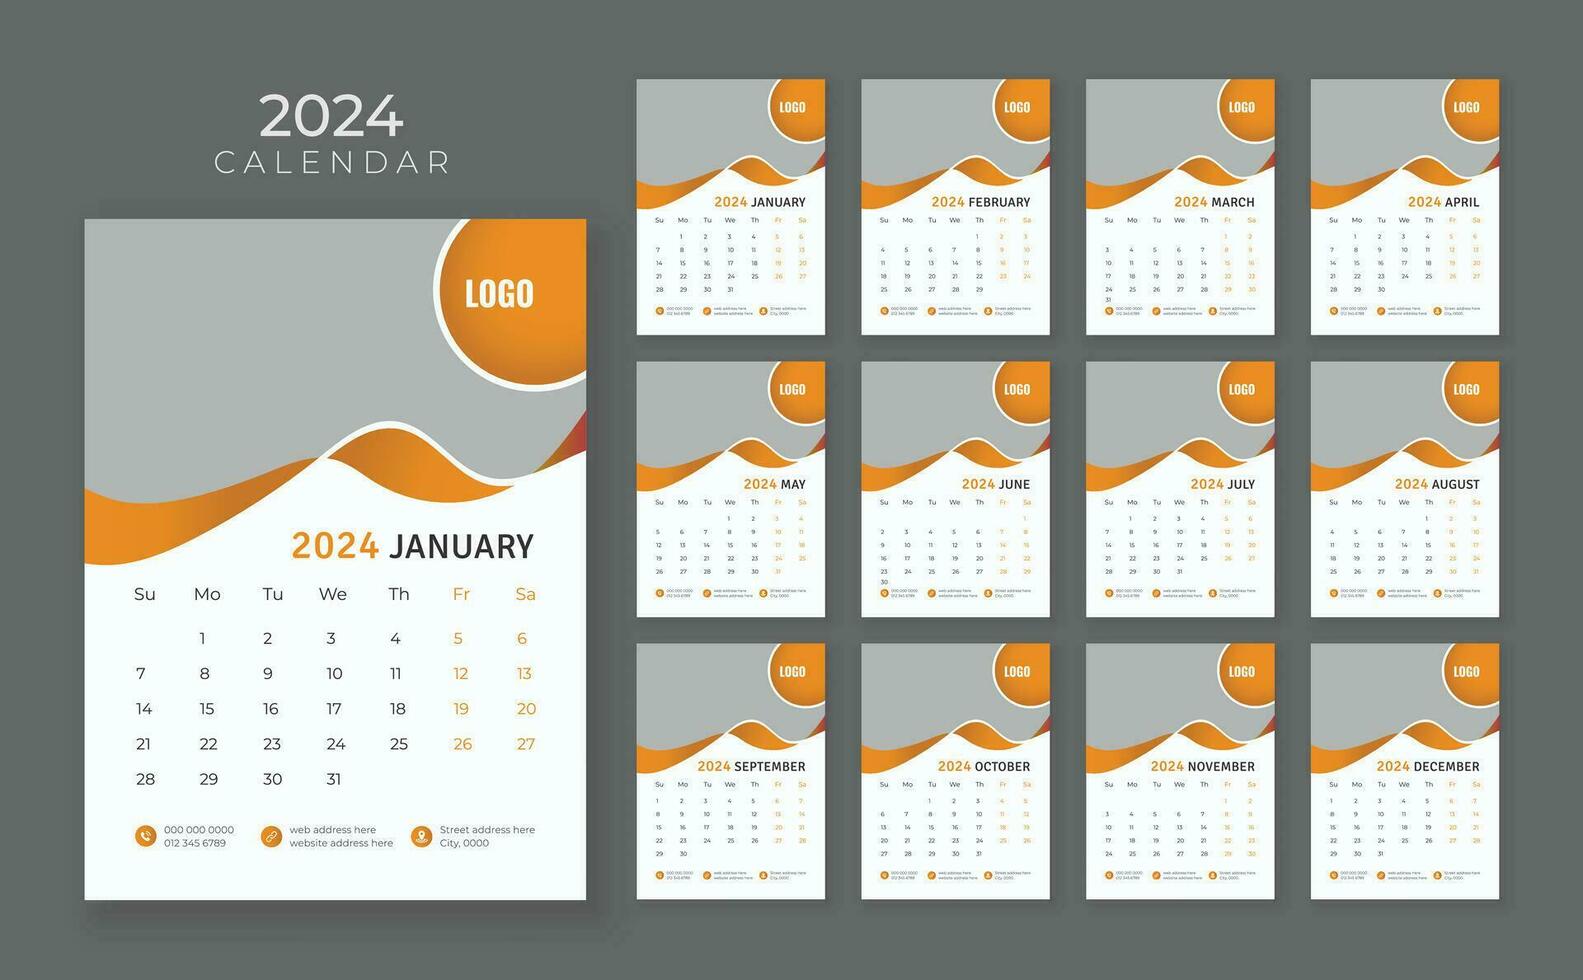 12 page wall calendar 2024, Company Calendar template, Week start Sunday, Wall calendar in a minimalist style vector